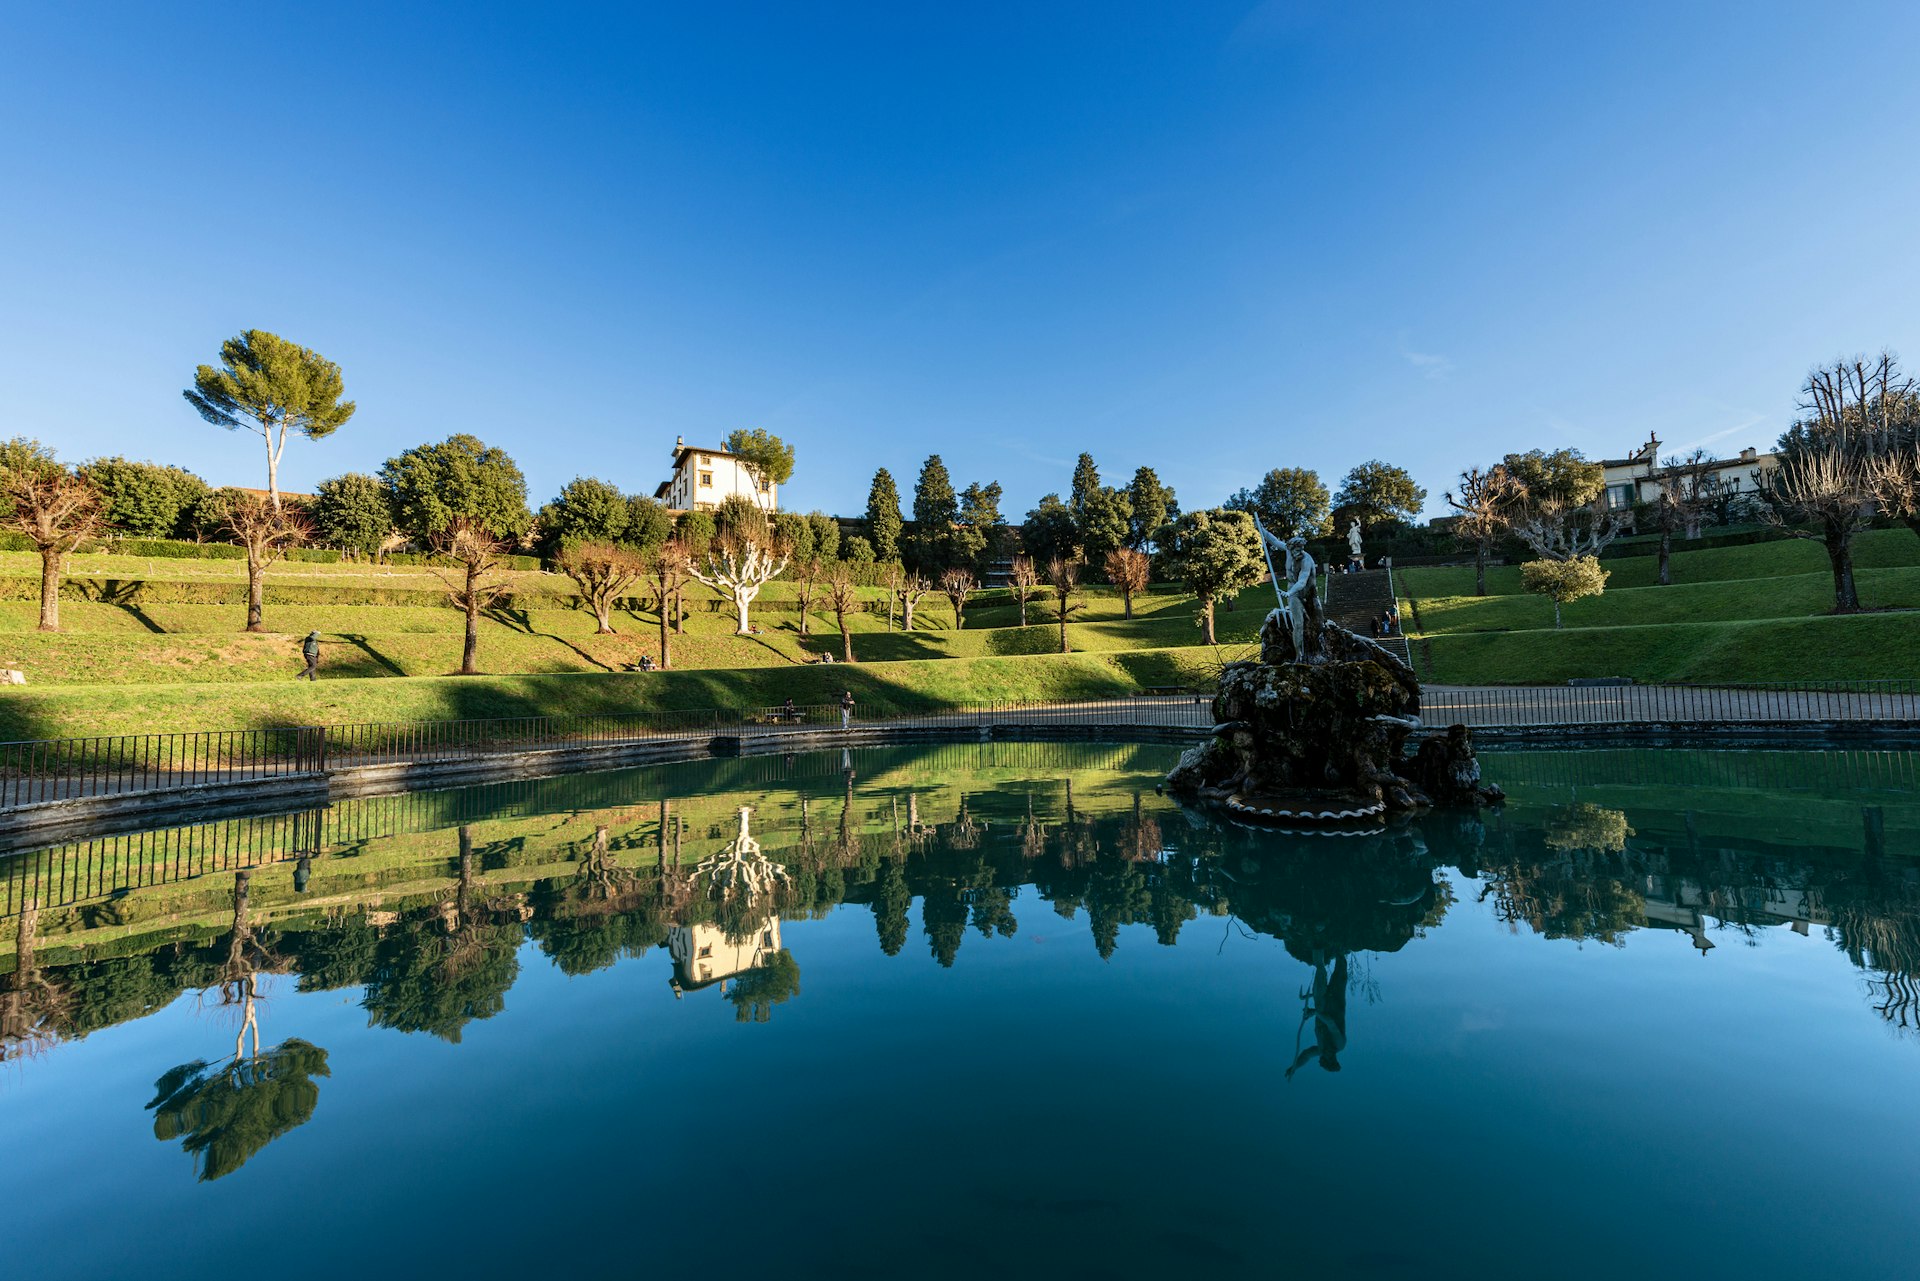 The Neptune Fountain in Boboli Gardens in Florence